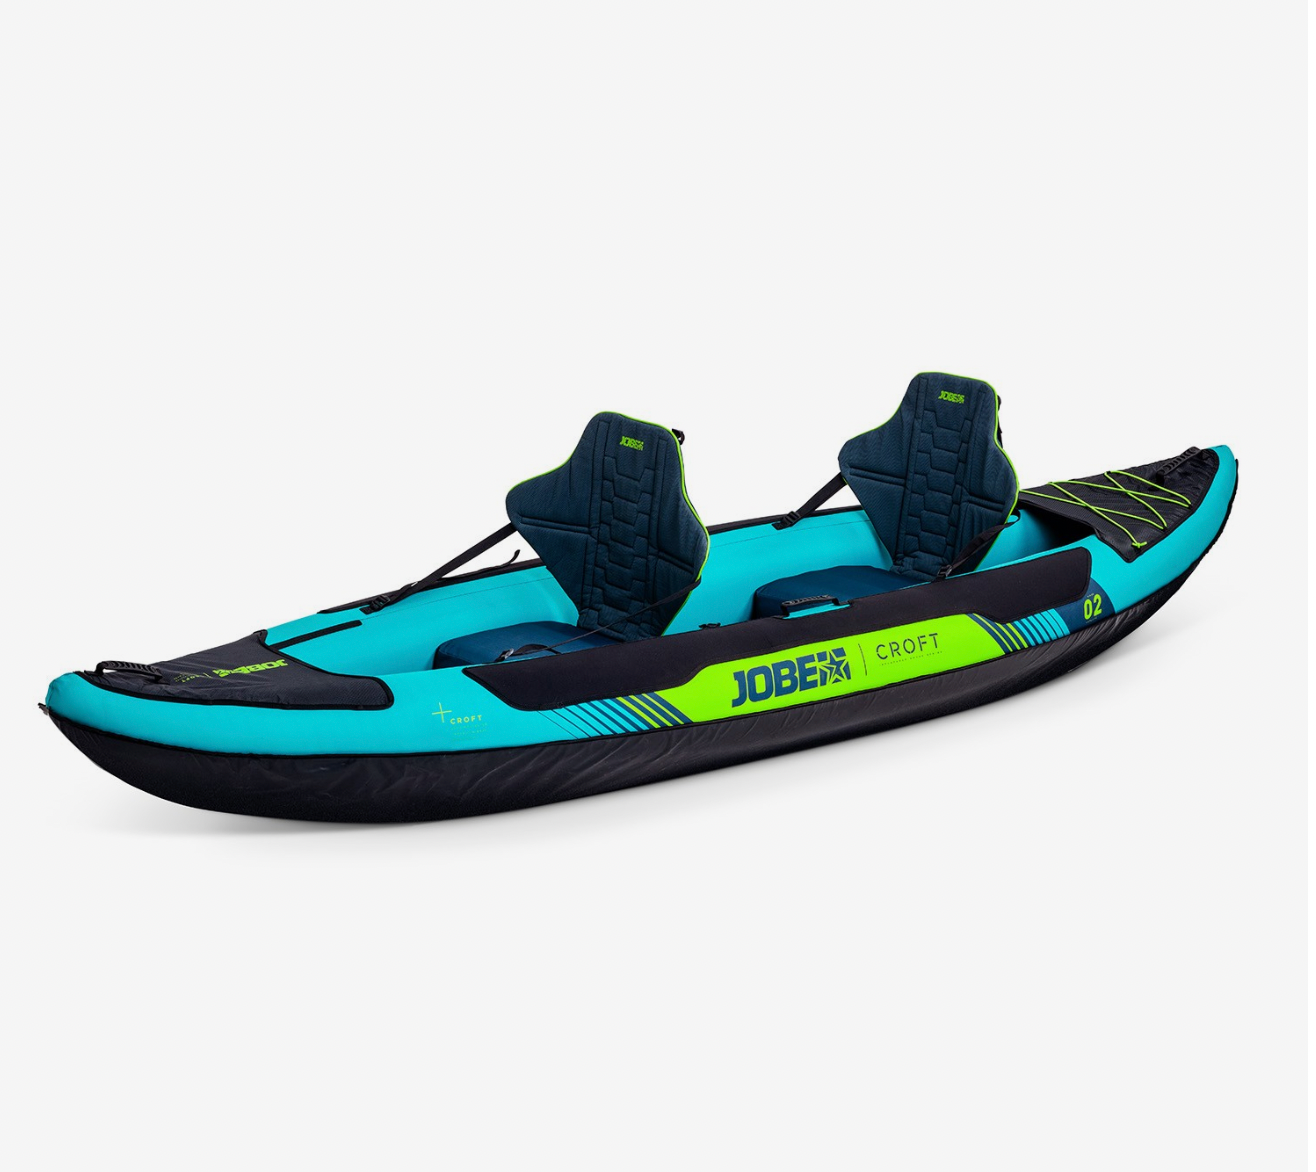 Jobe Croft Inflatable Kayak